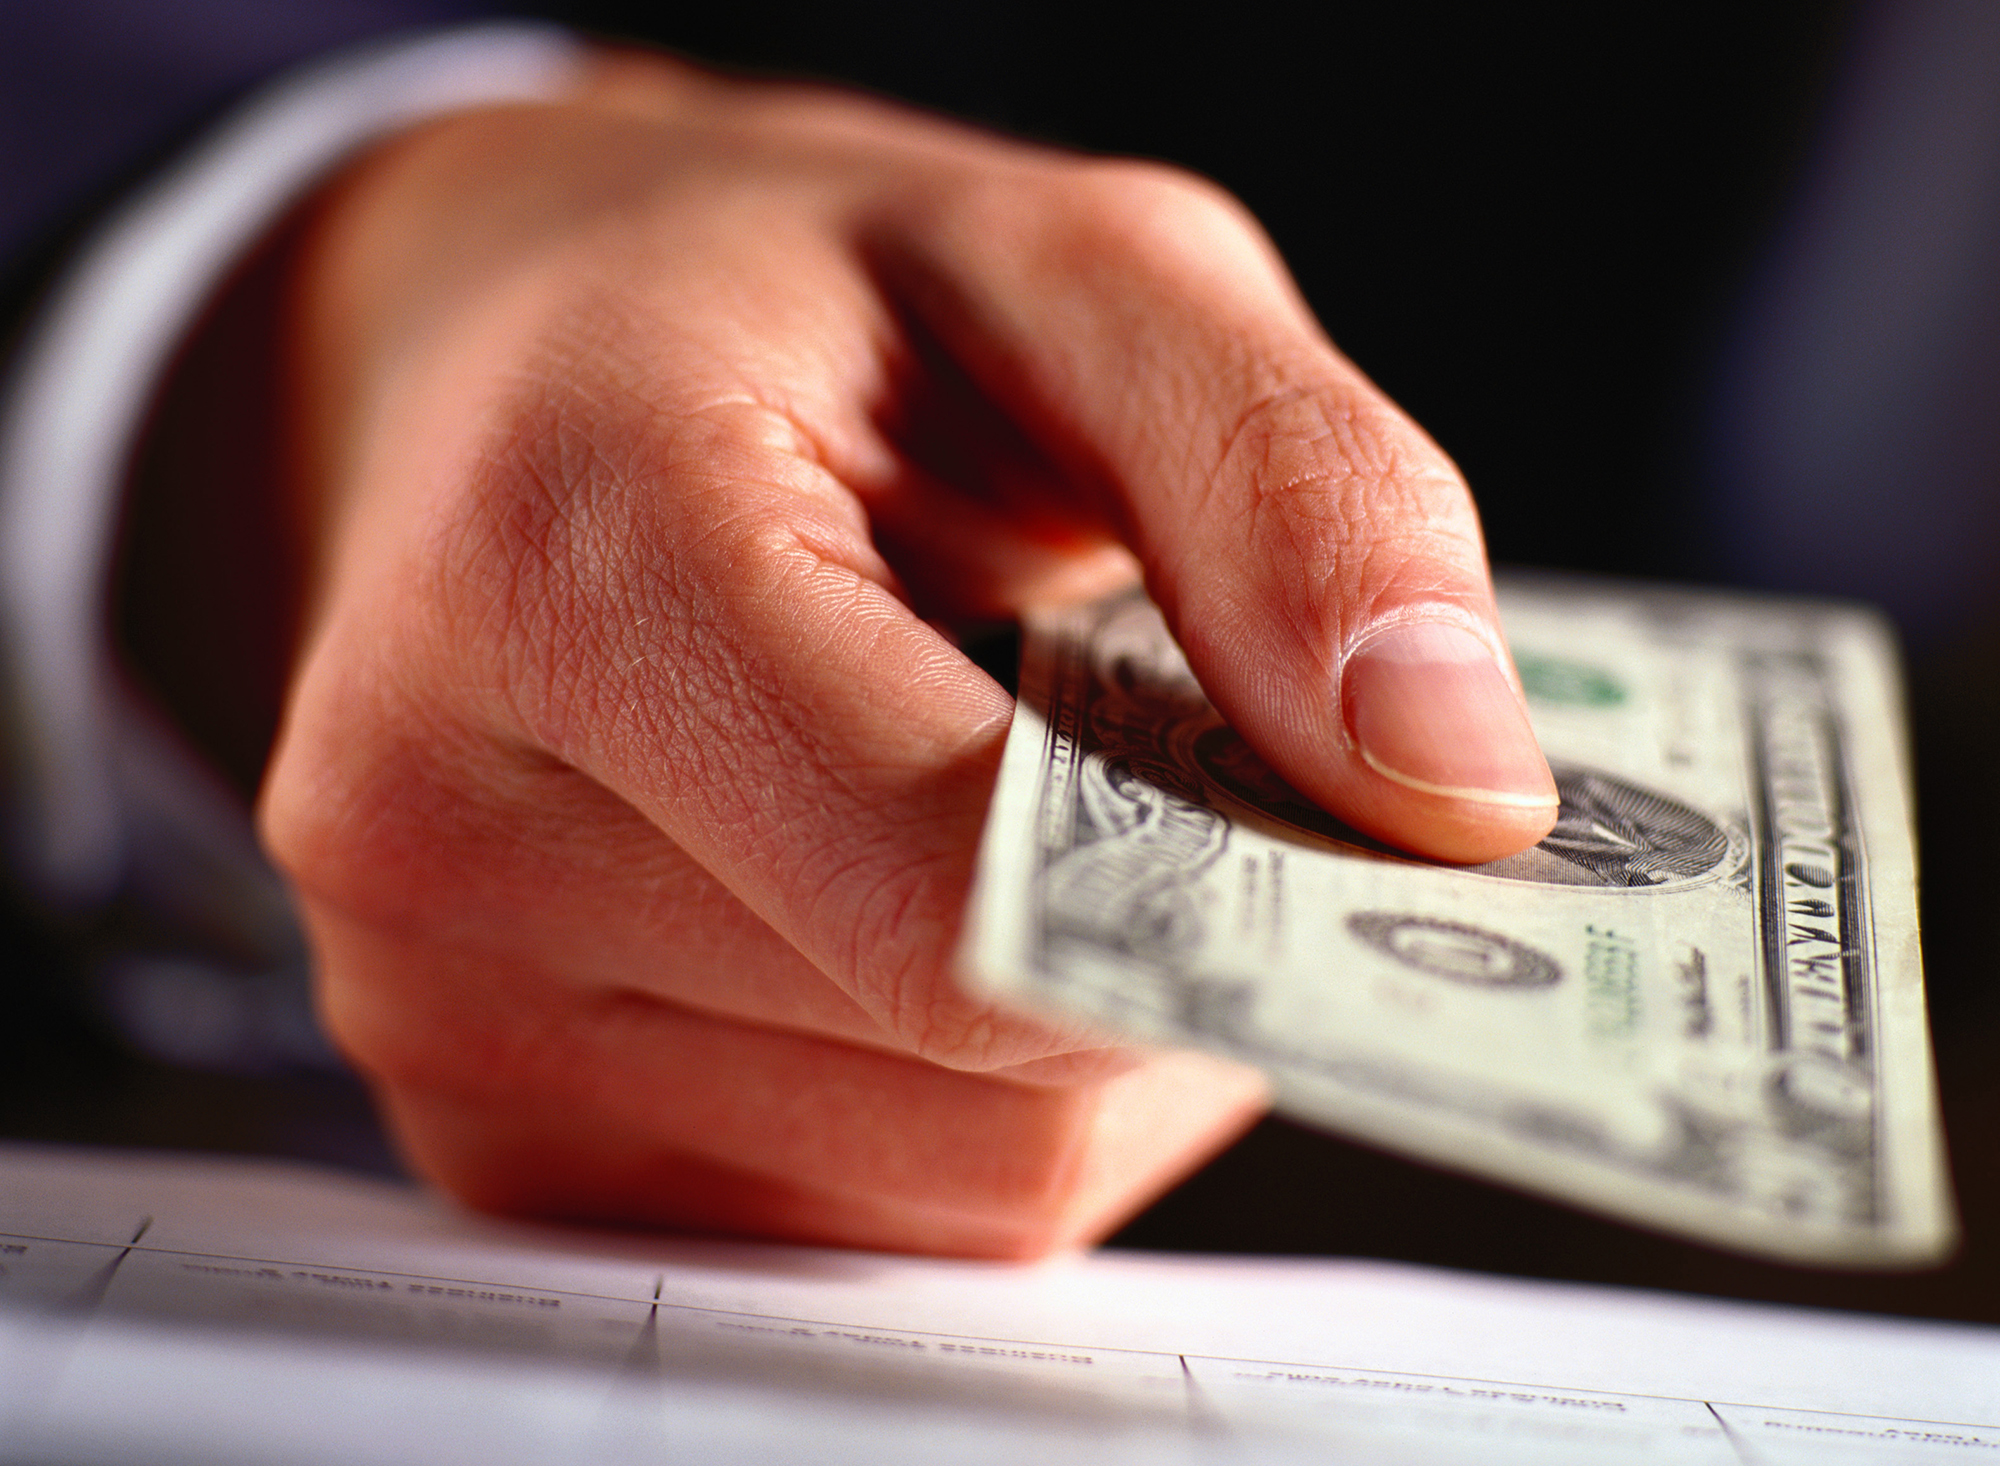 A close up of a hand holding a twenty dollar bill